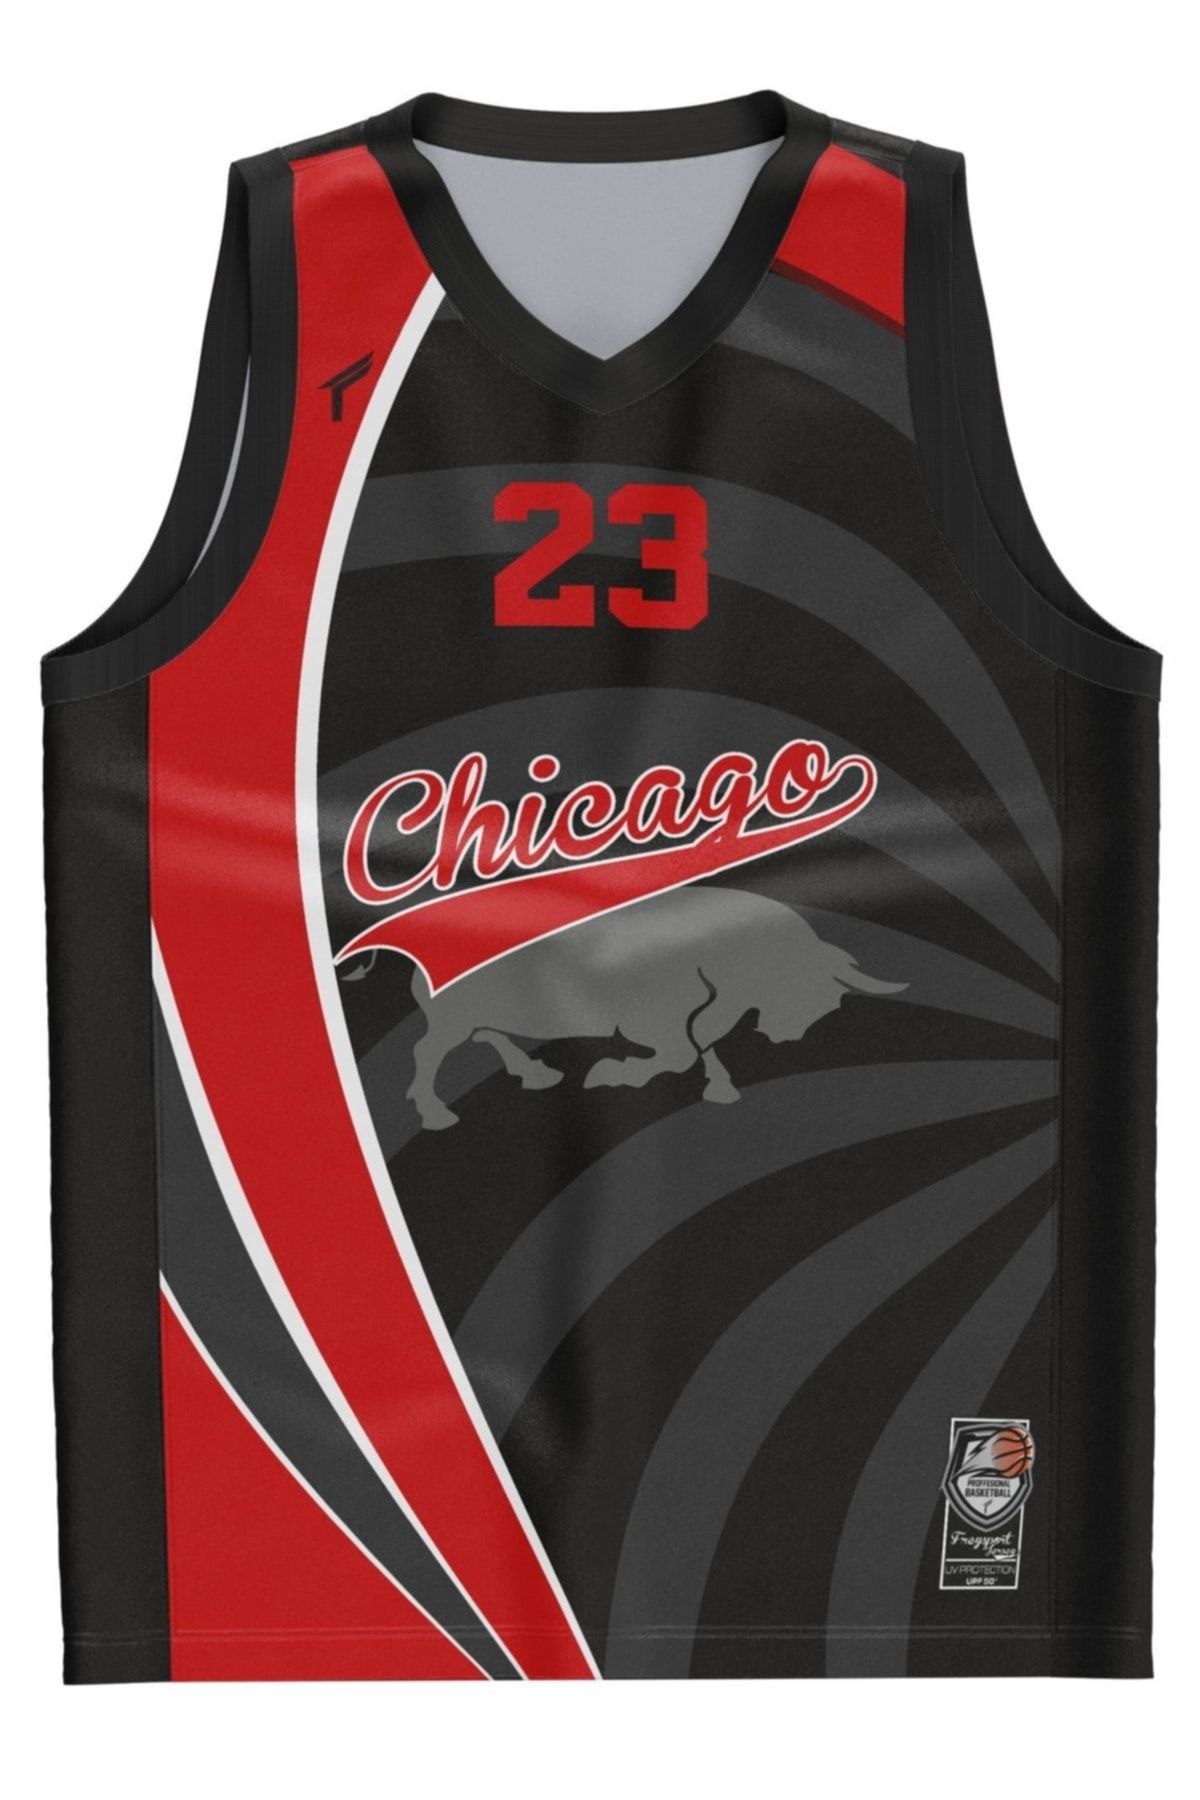 Freysport Chicago Basketbol Forması